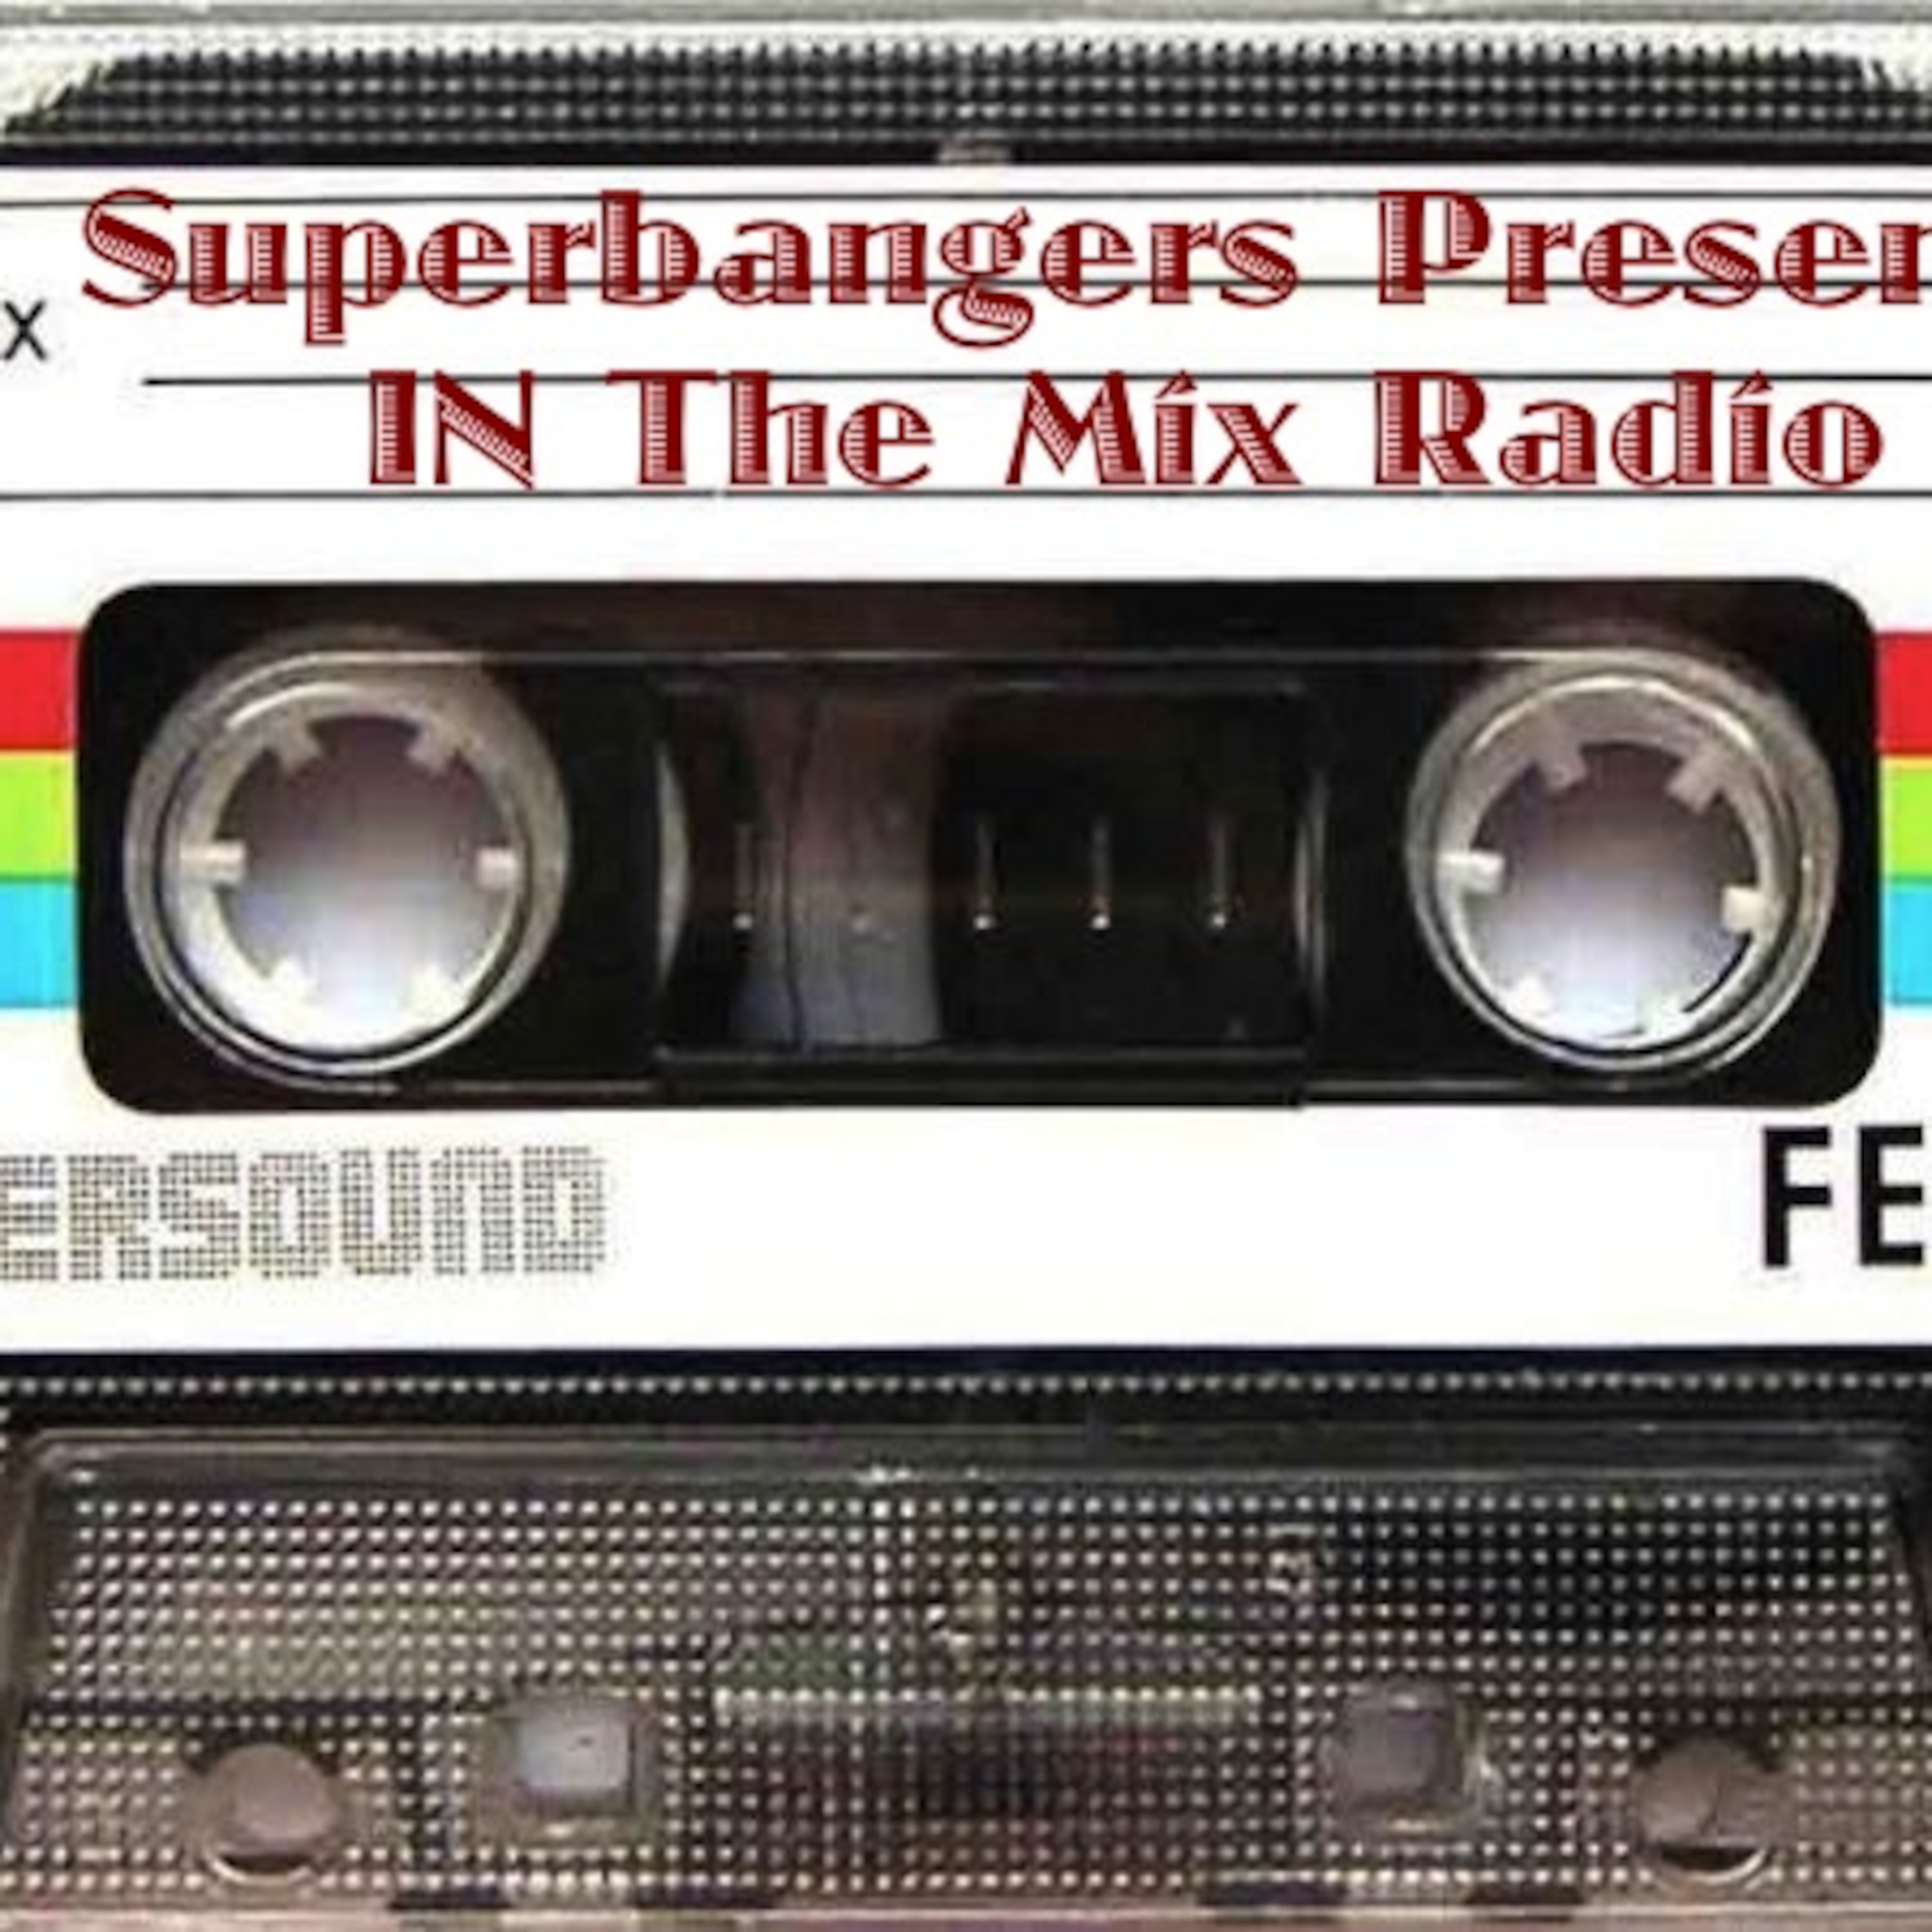 Superbangers' Podcast